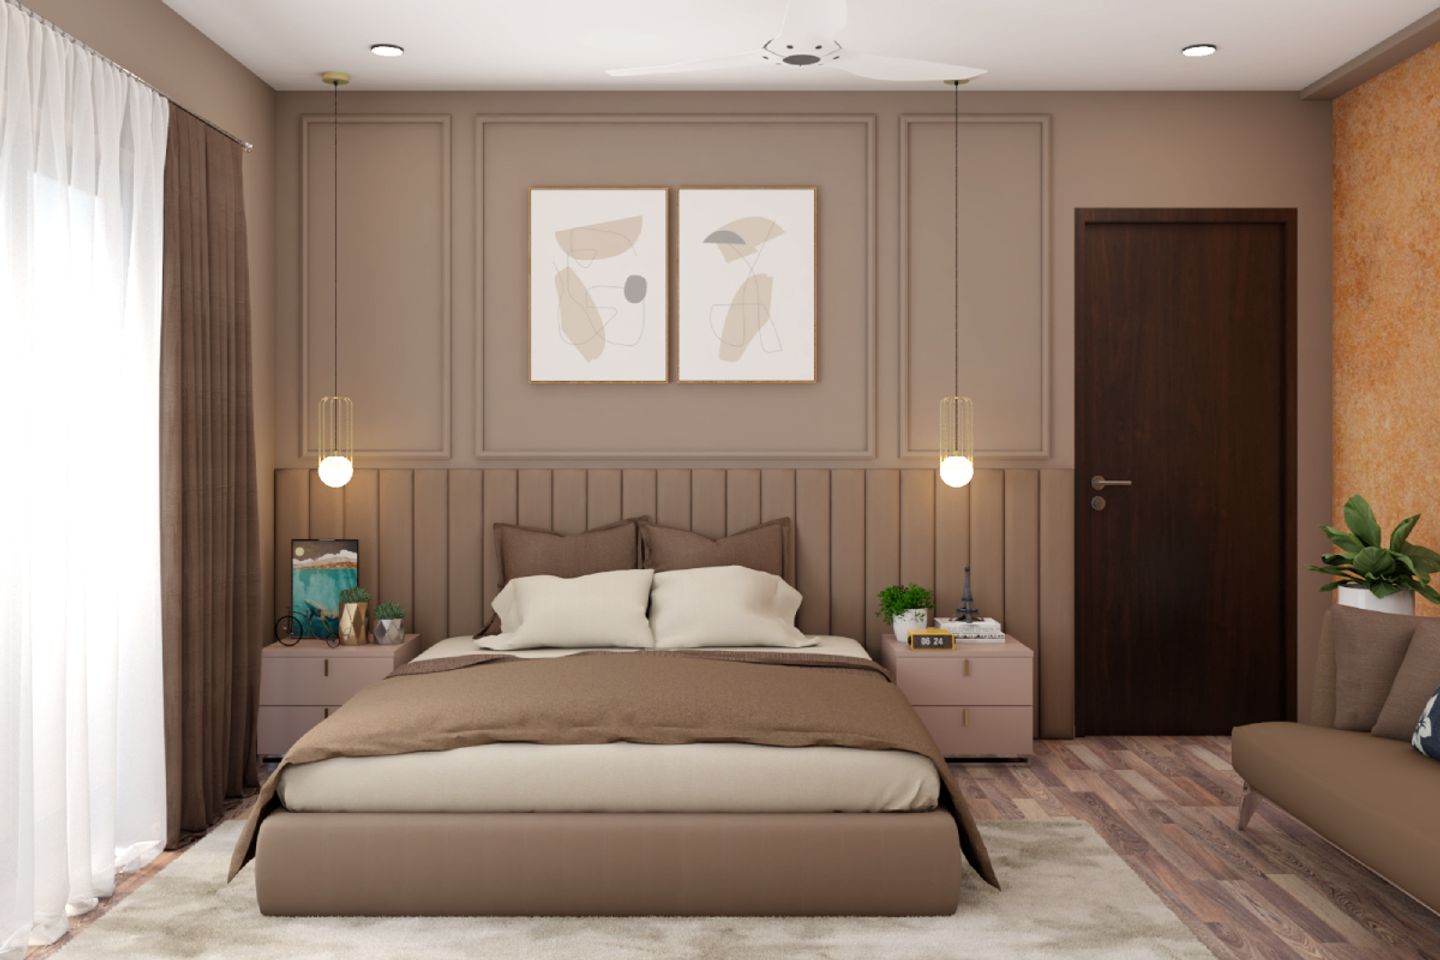 Master Bedroom With Tufted Beige Backpanel - Livspace